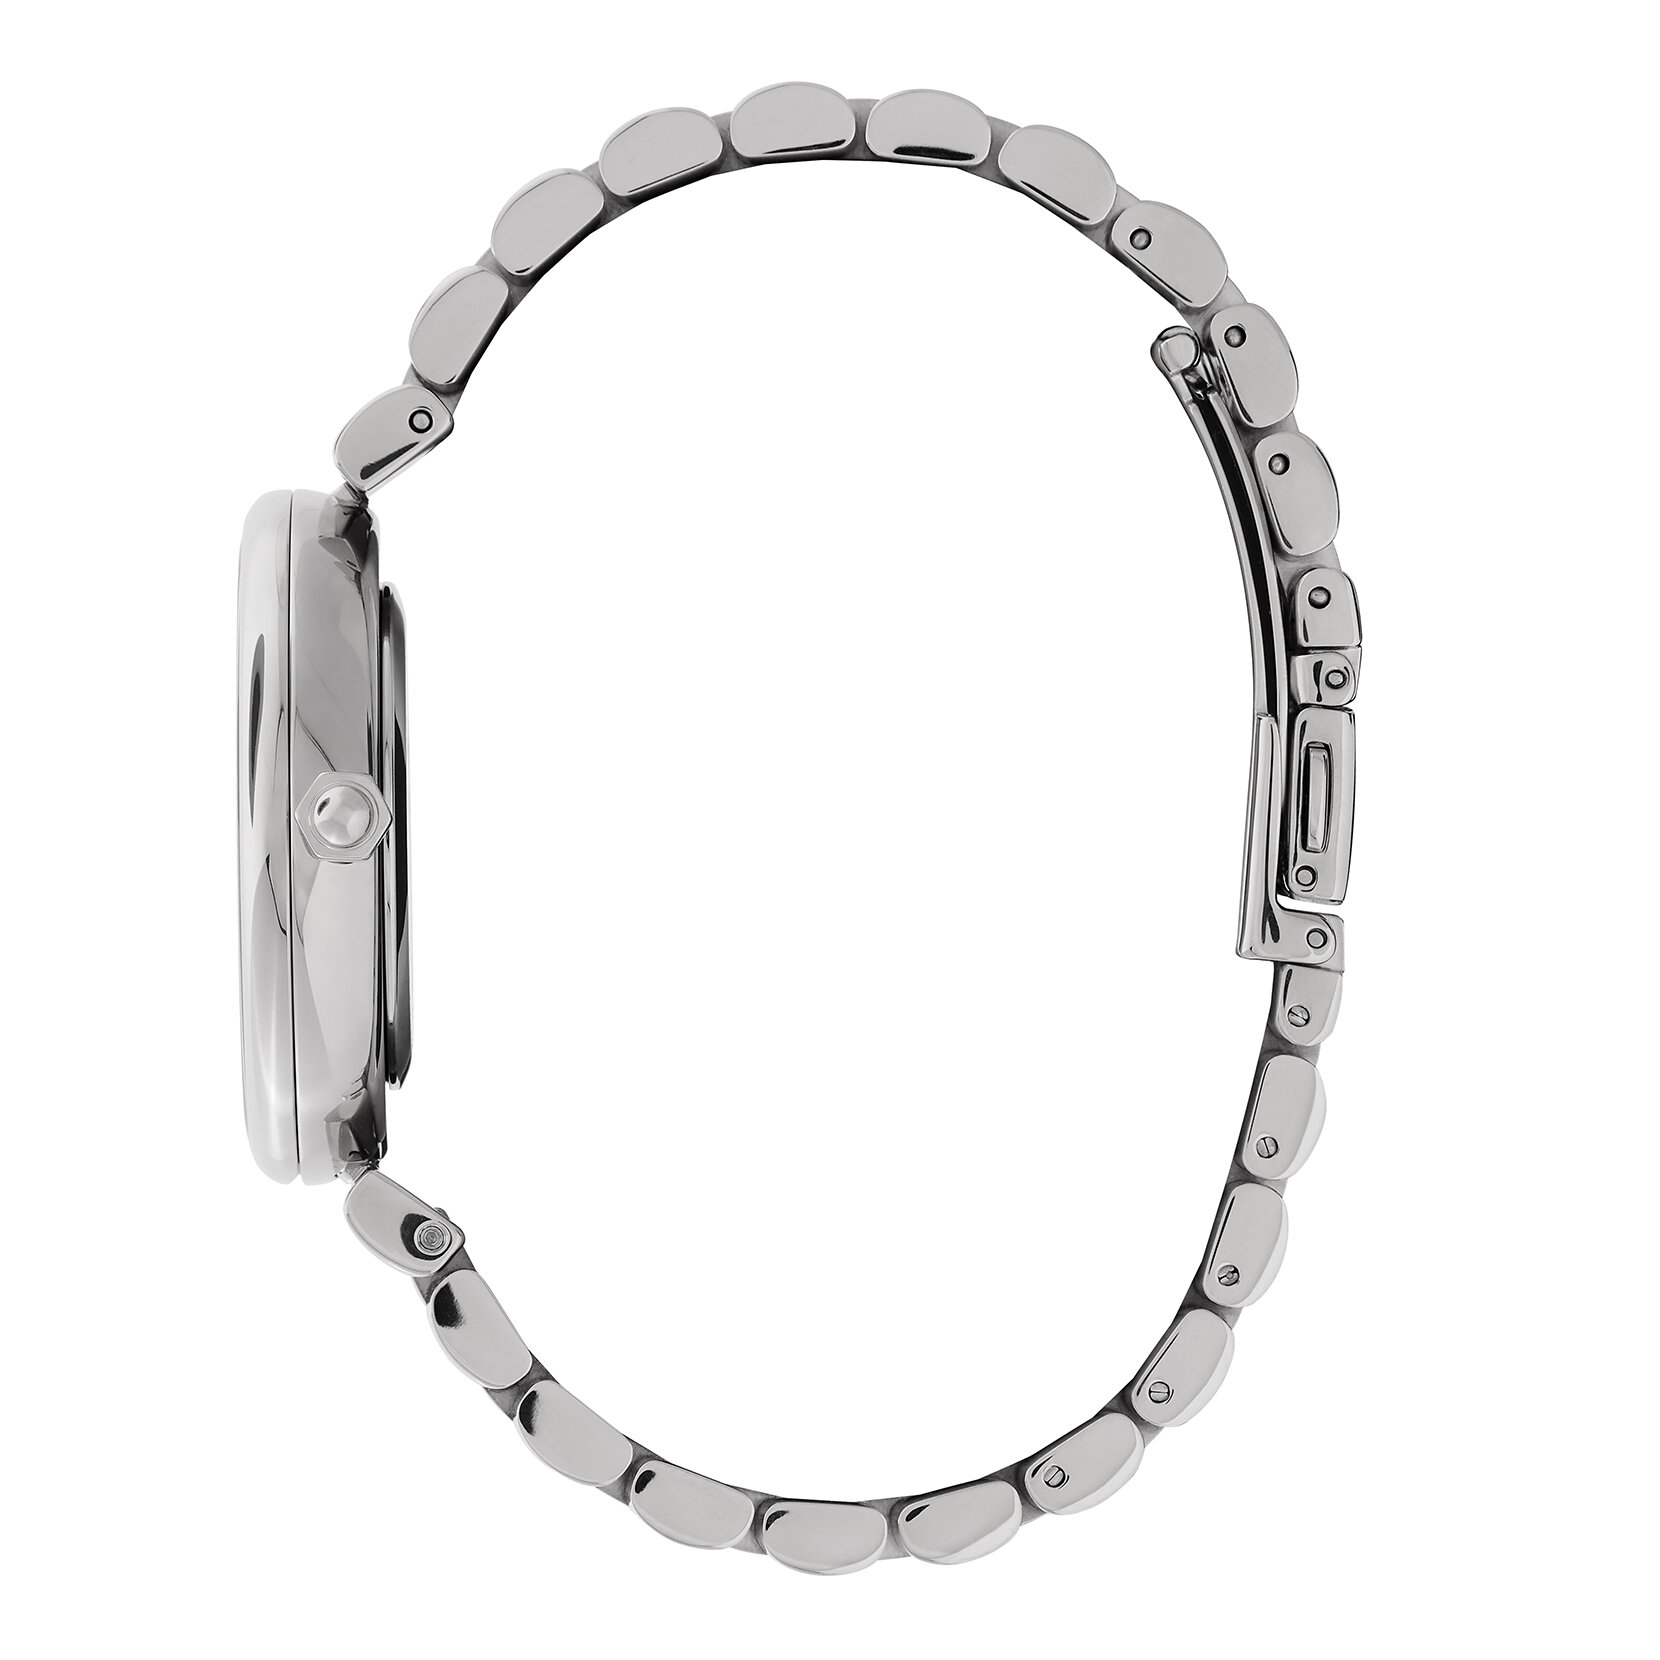 36mm Dogwood T-Bar White & Silver Bracelet Watch